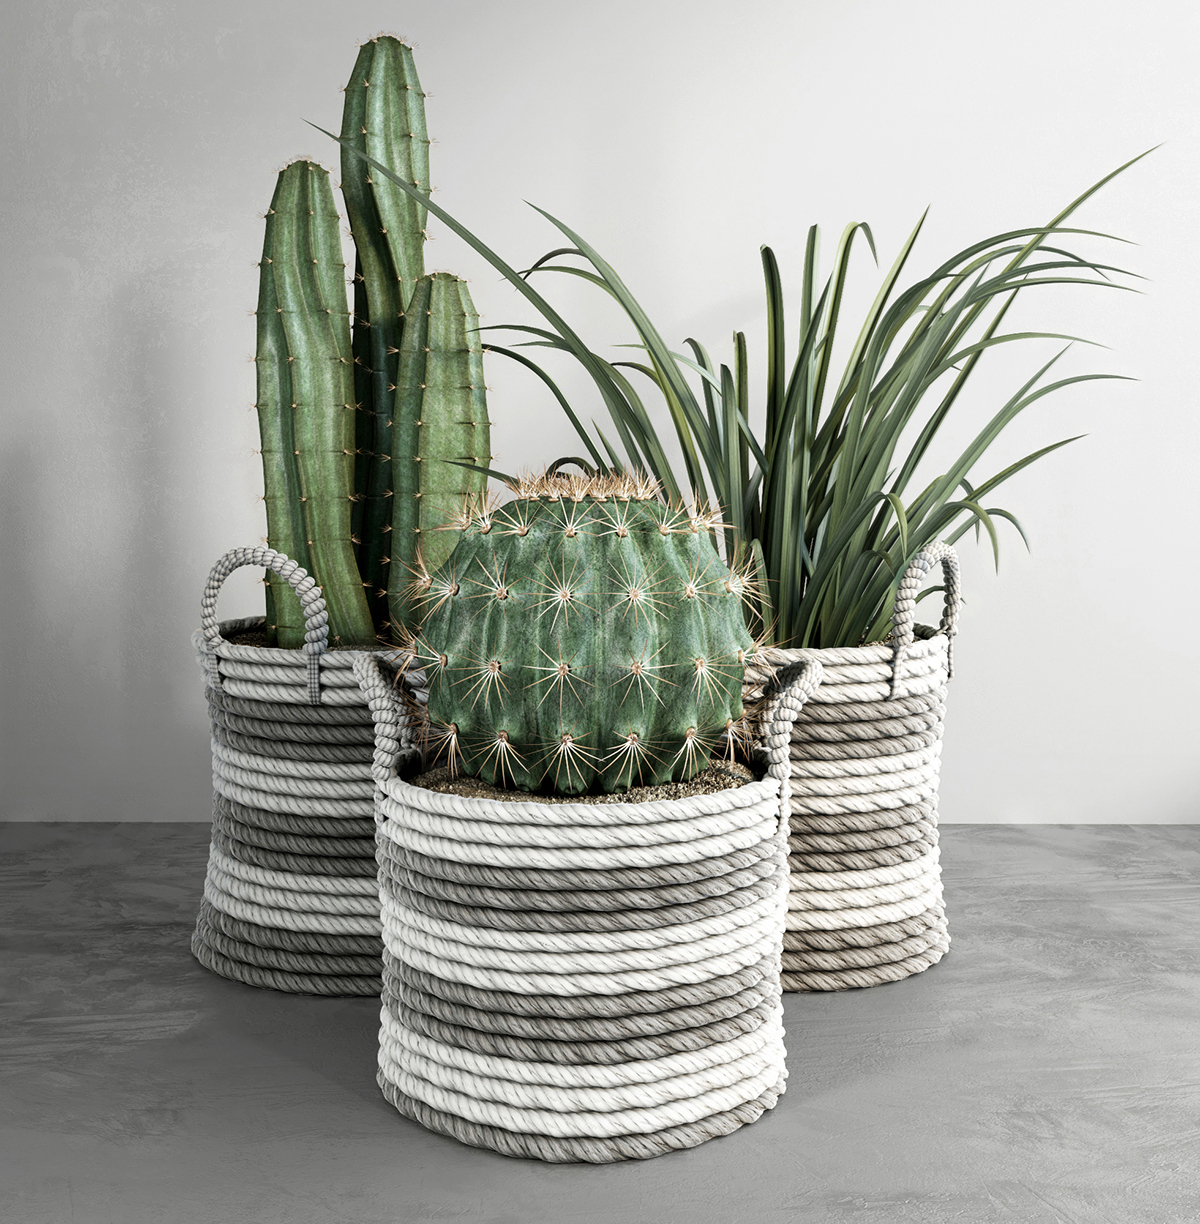 3dmodel 3dmax cactus plants free corona coronarenderer Pots 3D CG